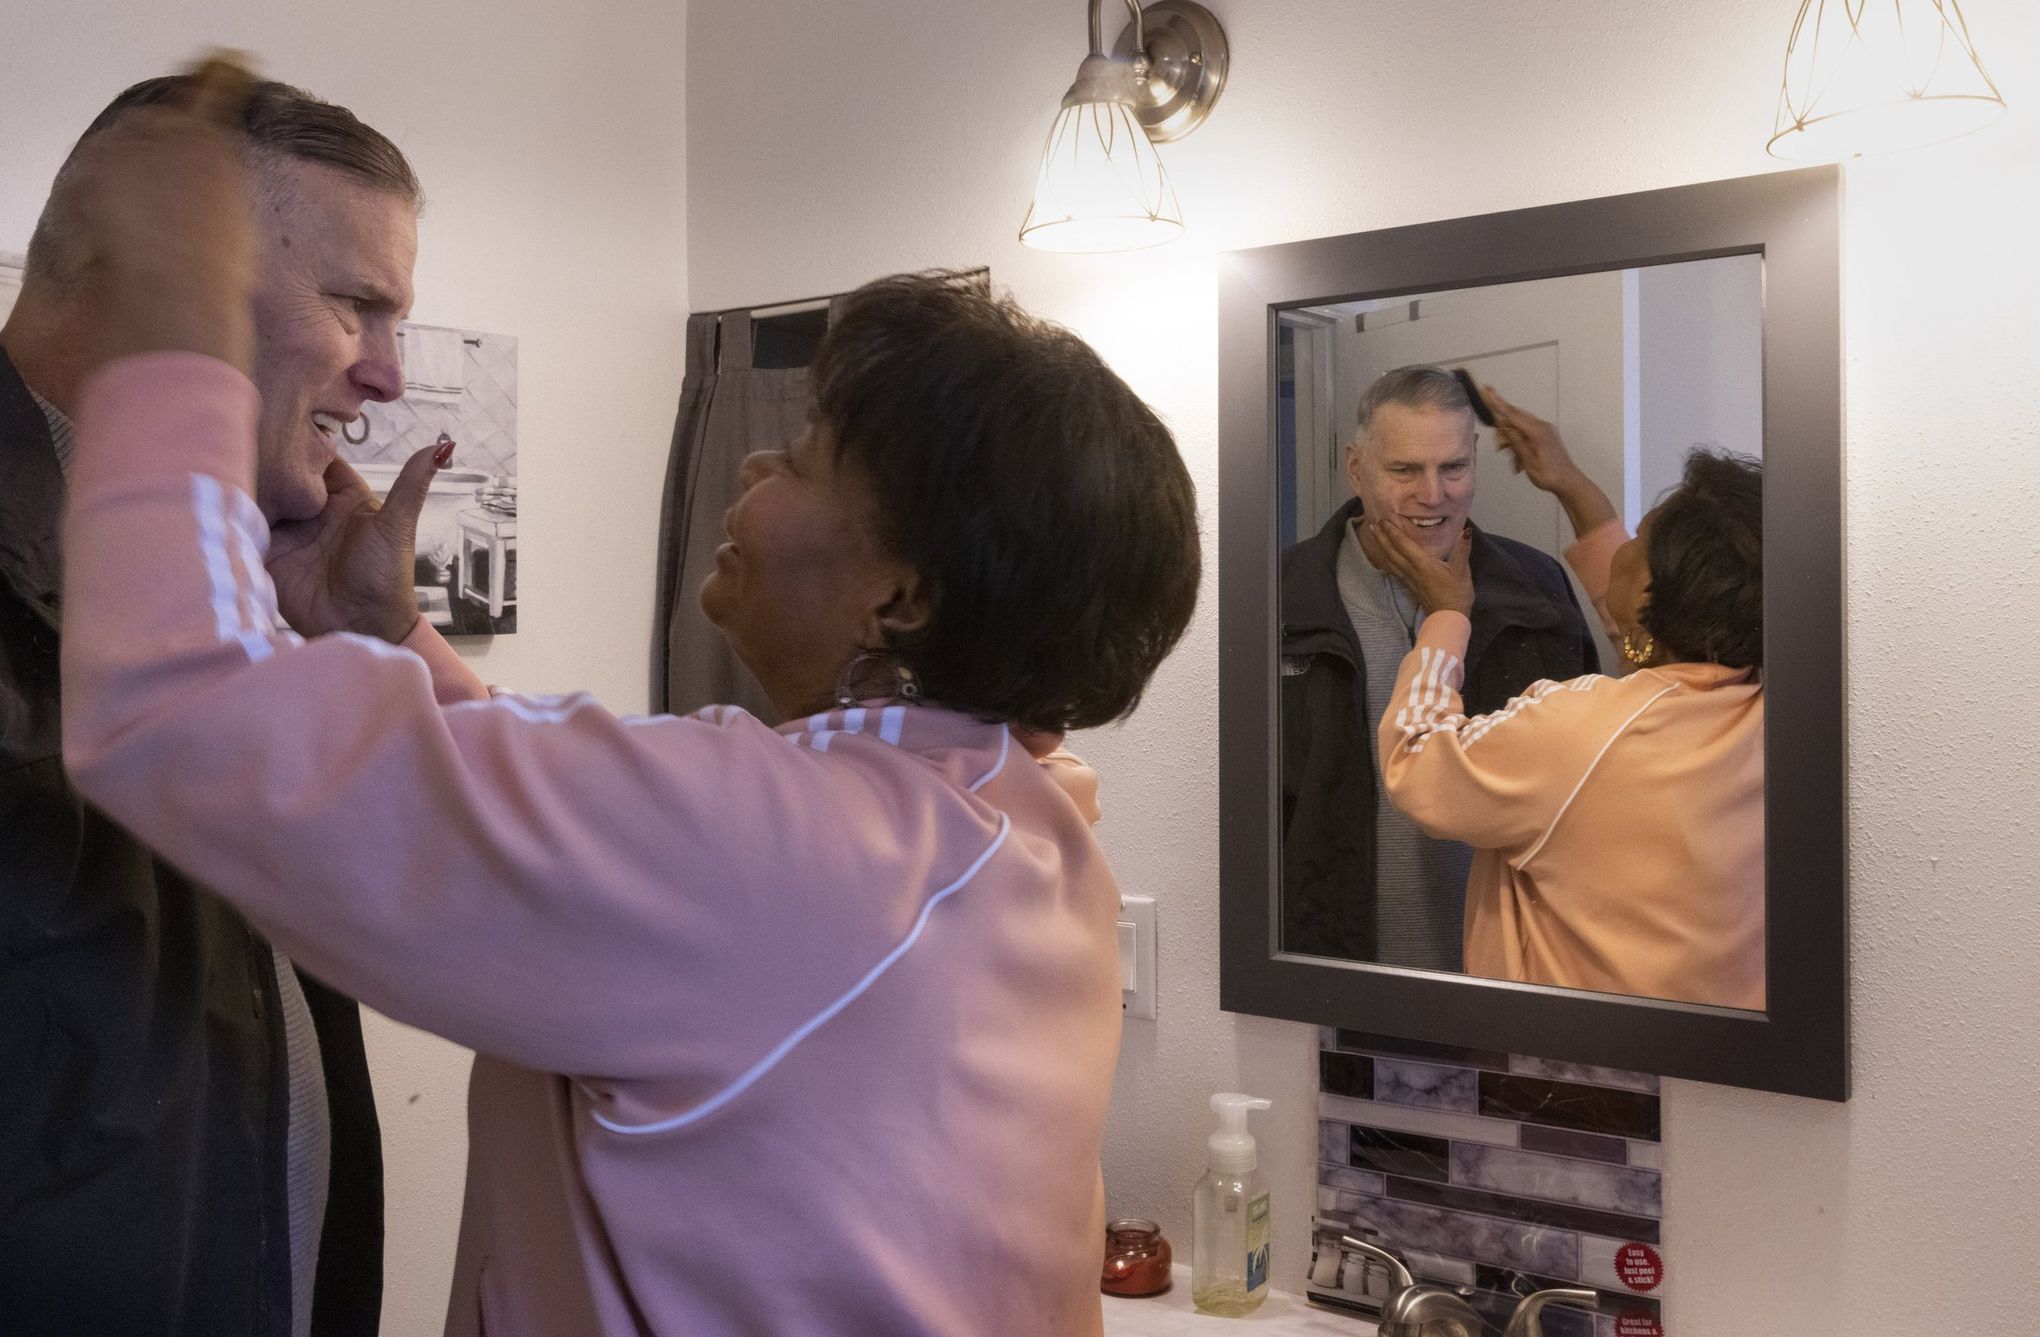 Angela Petersen combs her husband Chris’ hair at their home.